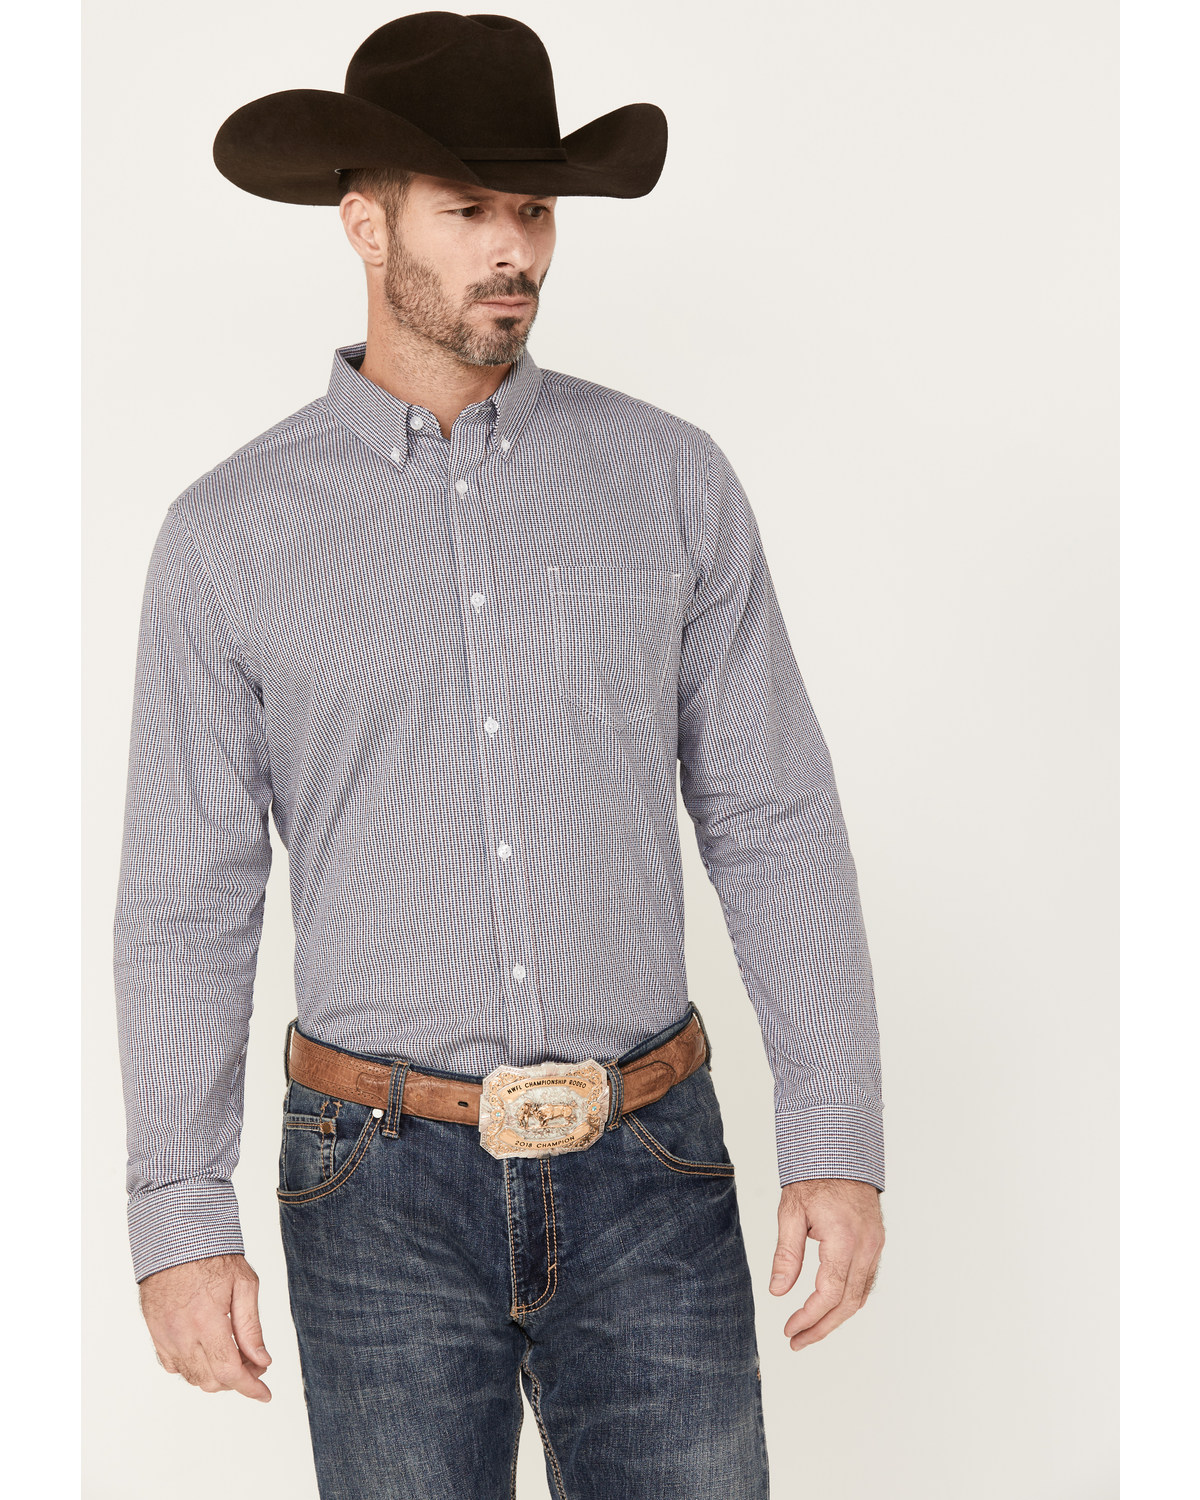 Cody James Men's Toby Long Sleeve Button-Down Stretch Western Shirt - Big & Tall